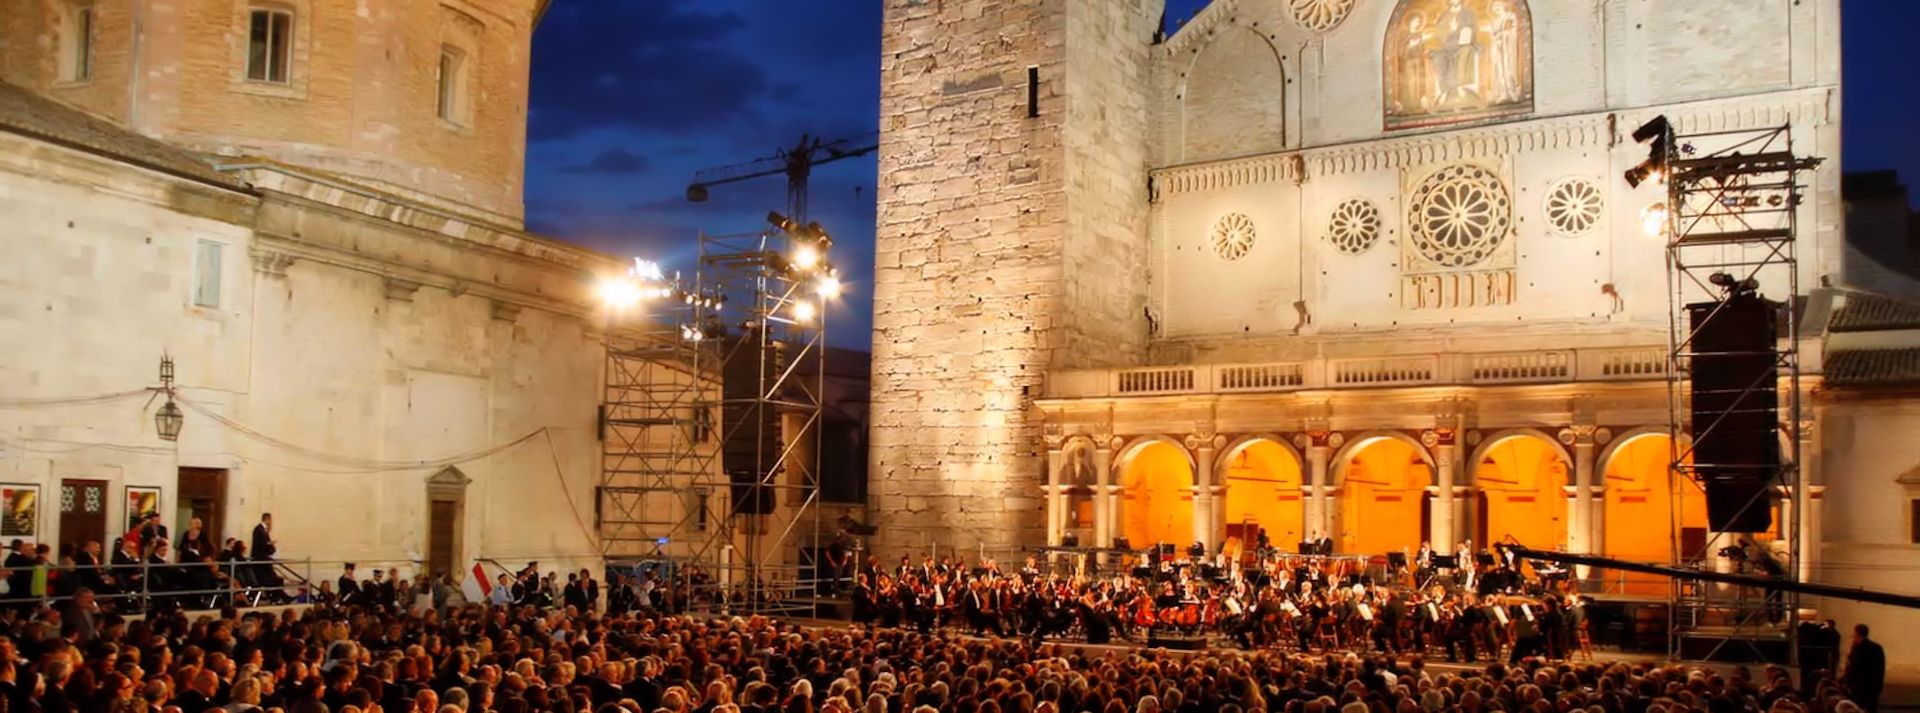 Festival dei due mondi Umbria